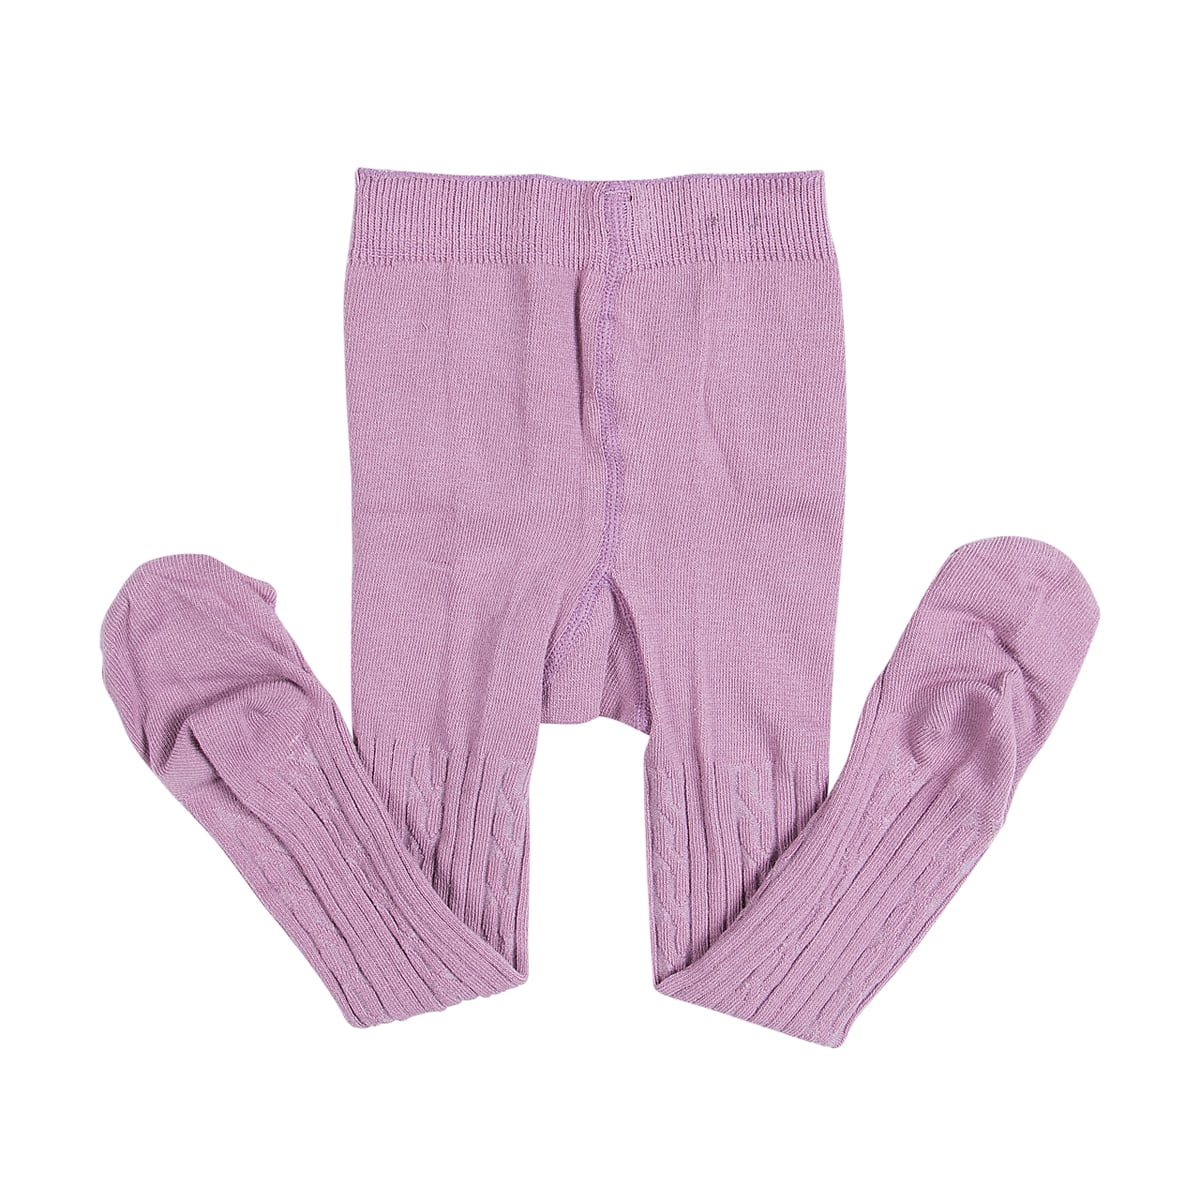 FP Baby Girl Toddler Kids Cotton Warm Tights Stockings Pantyhose Pants Socks Ey 